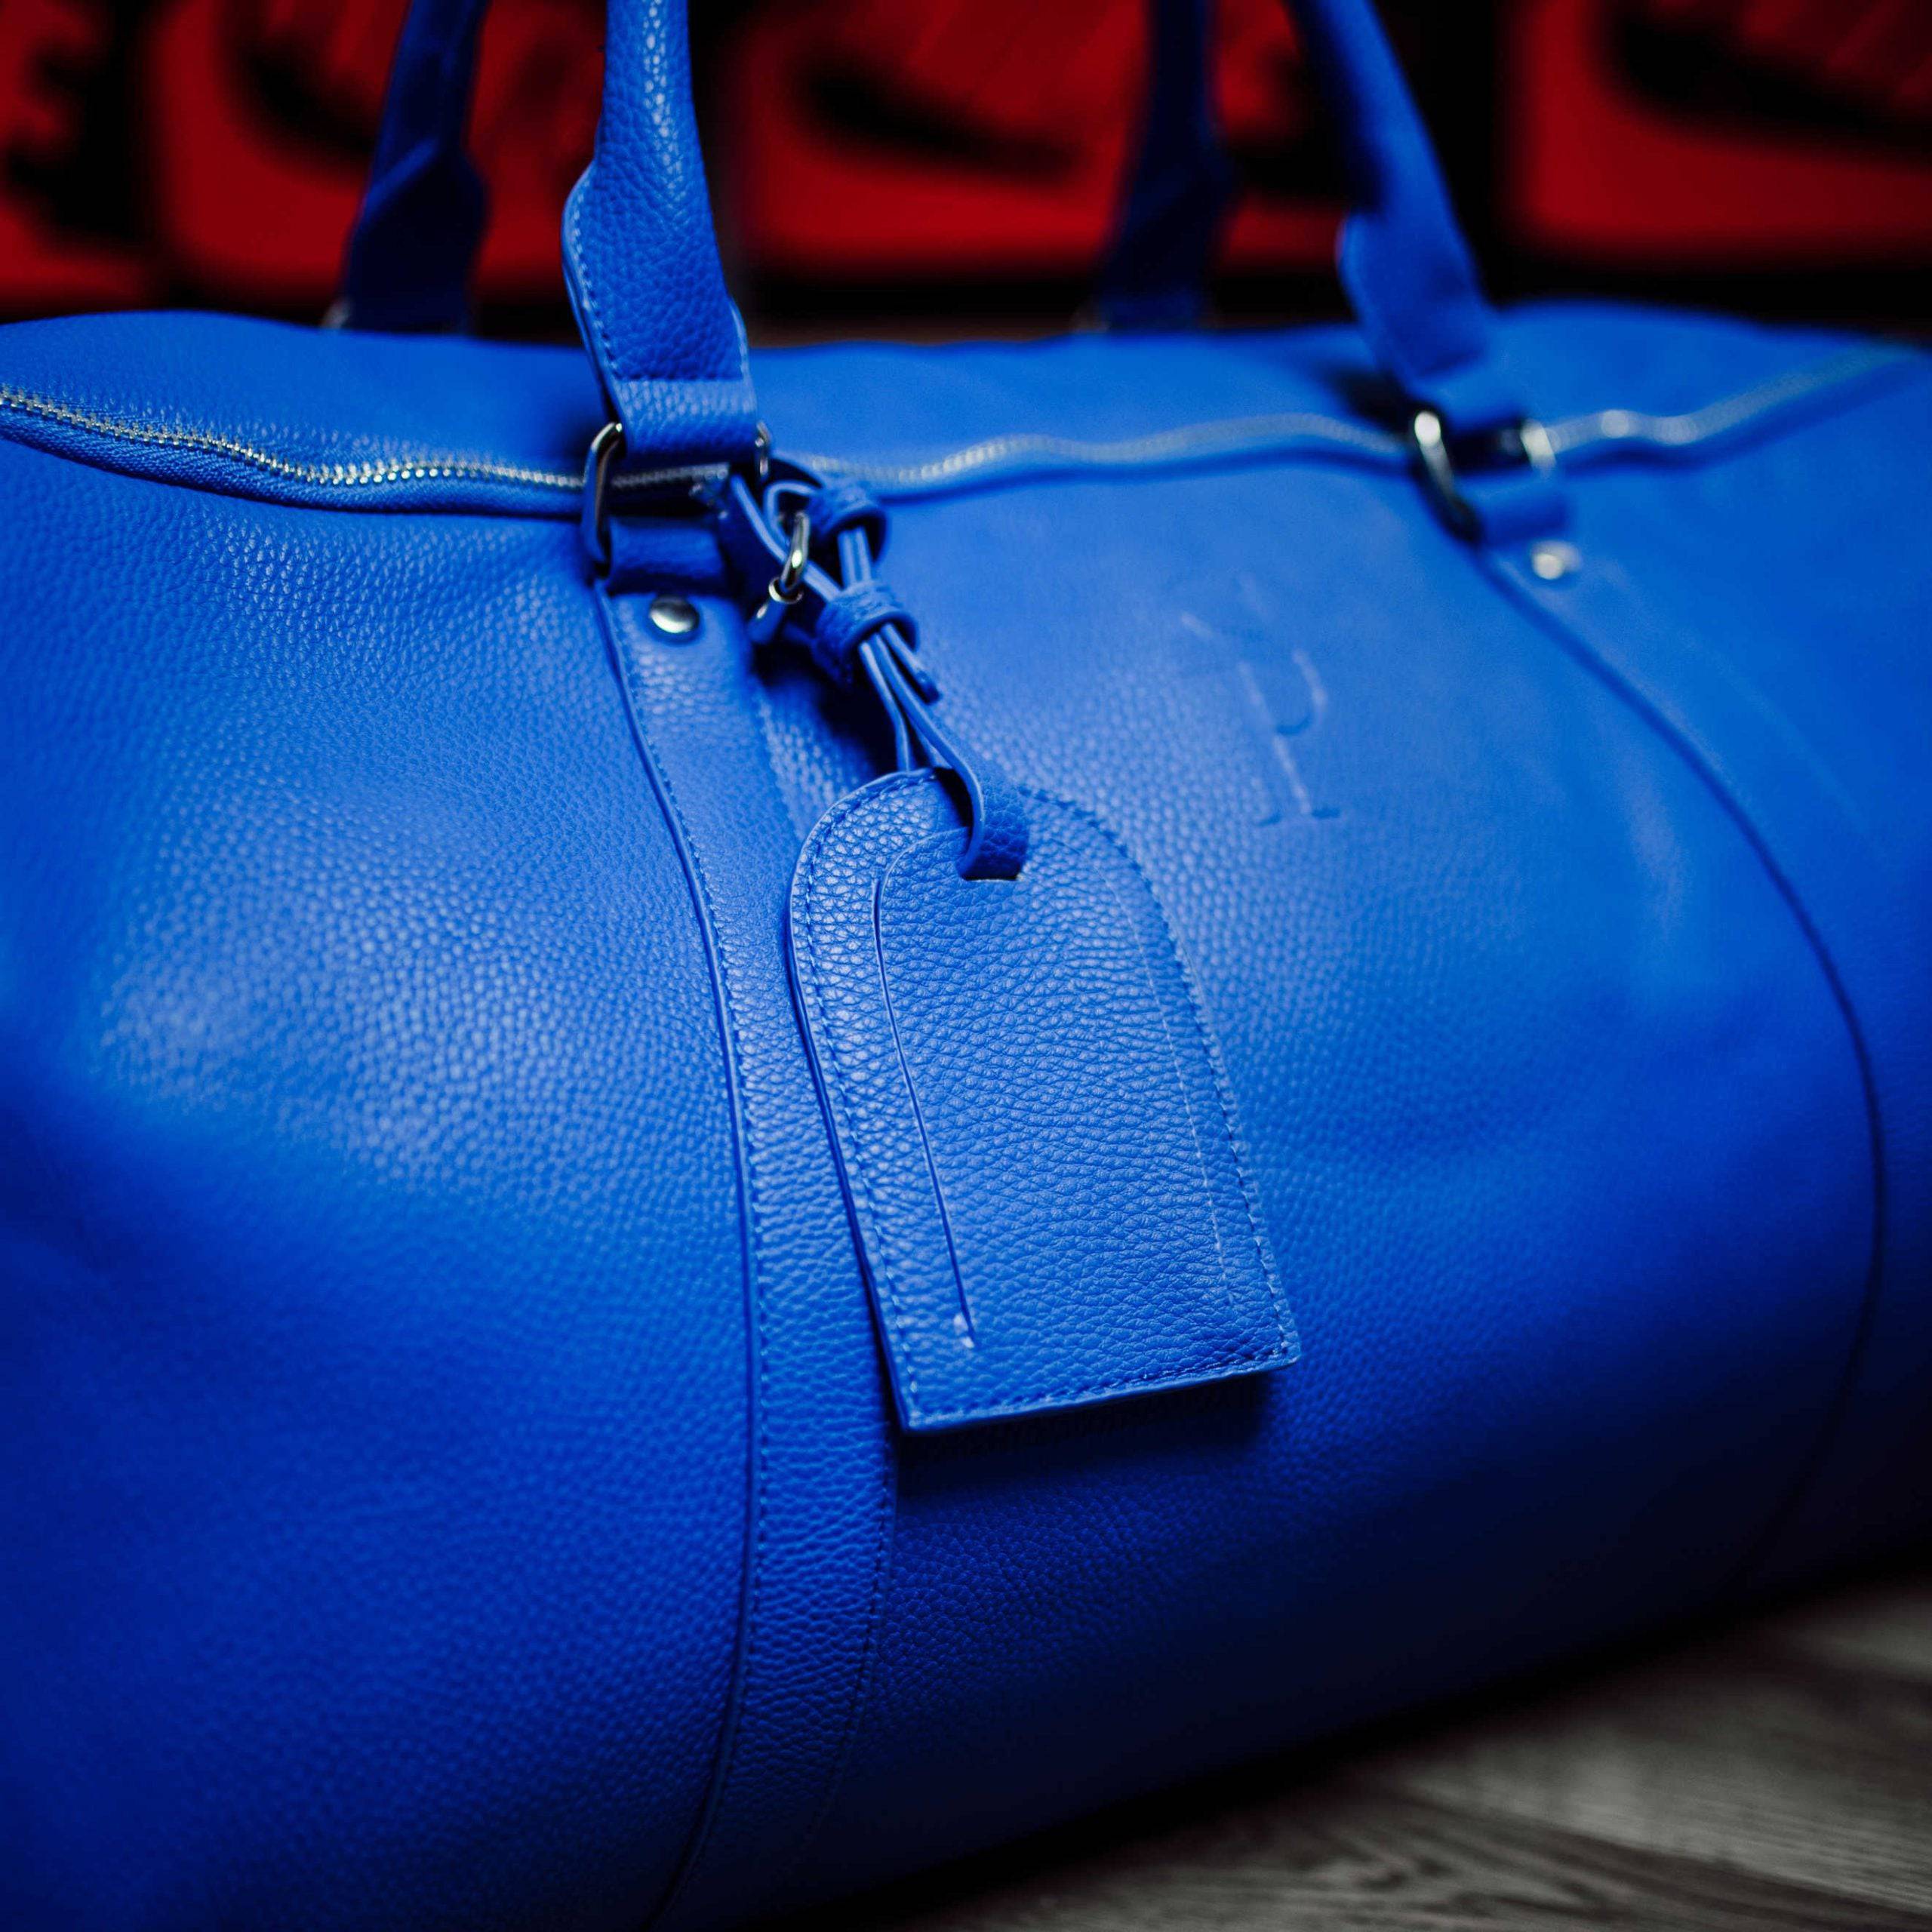 Royal Blue Leather Duffle (Warehouse Clearance) *Final Sale